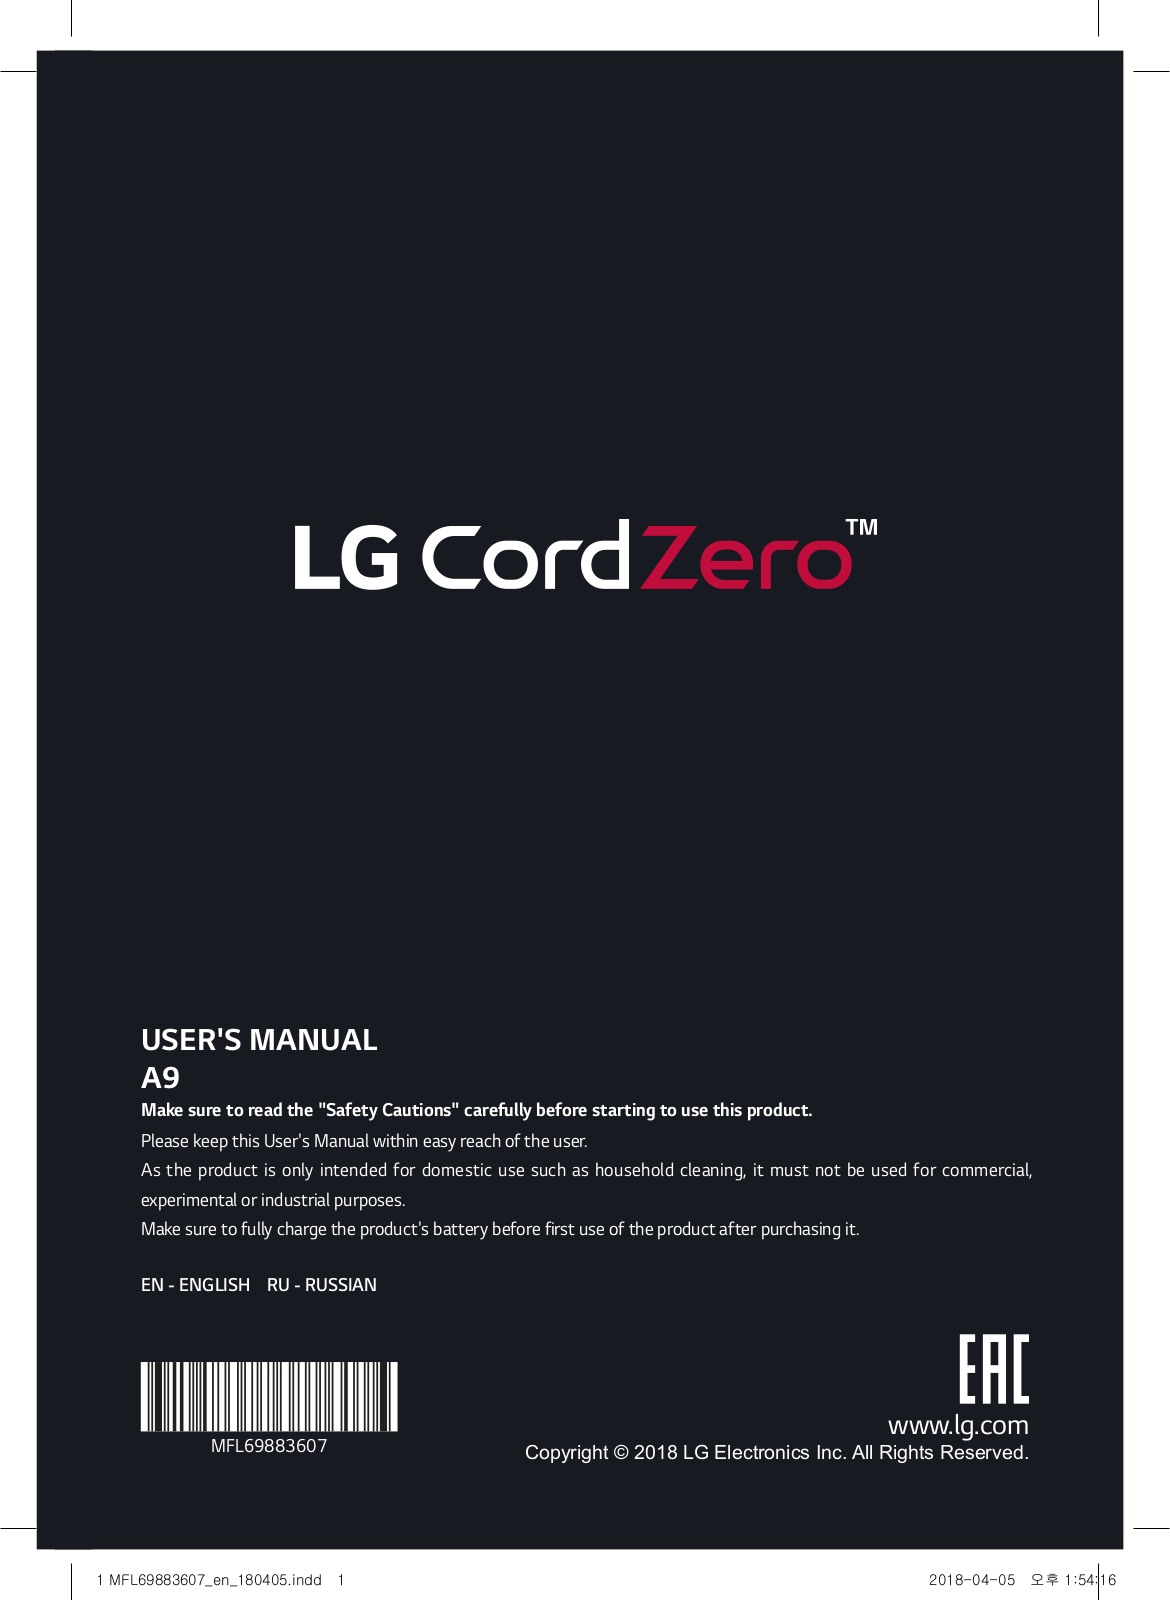 LG A9DDCARPET User Manual